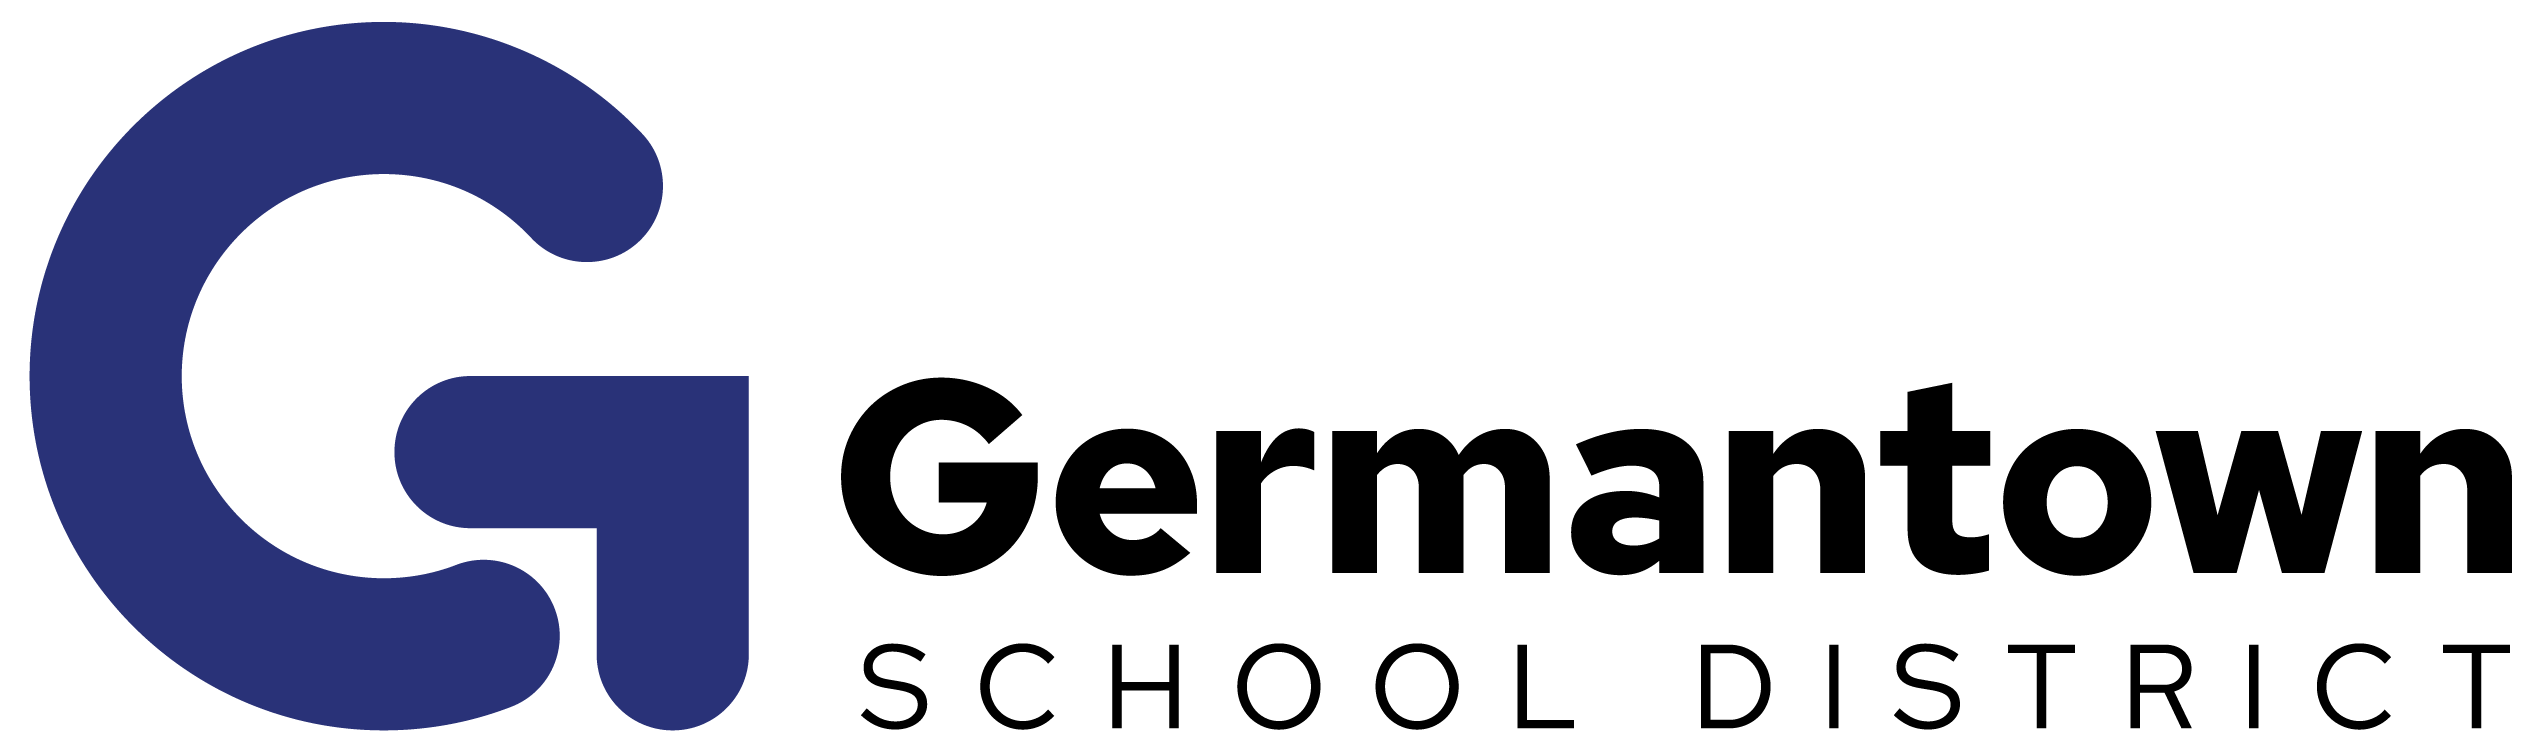 Germantown Speacial School District Logo